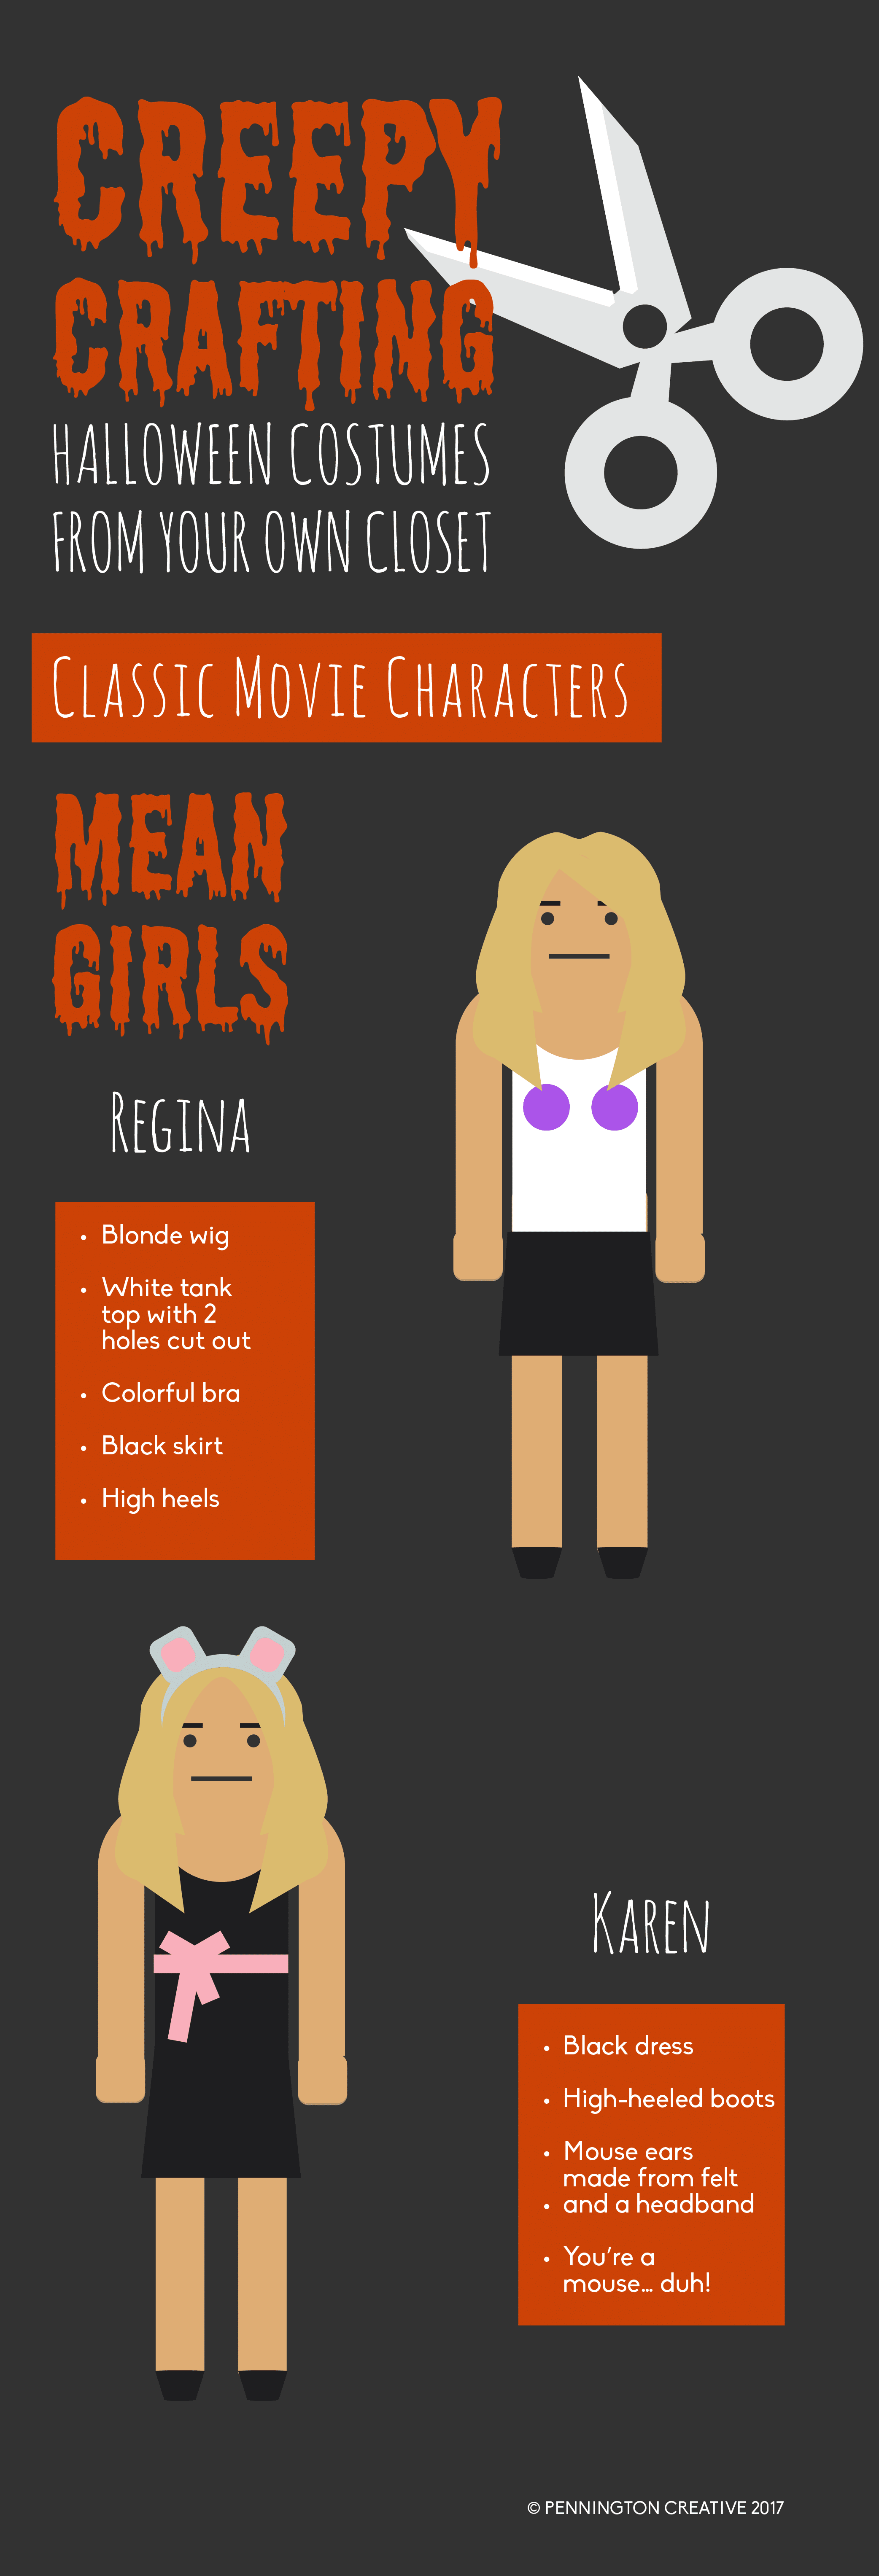 Mean Girls Halloween Costumes